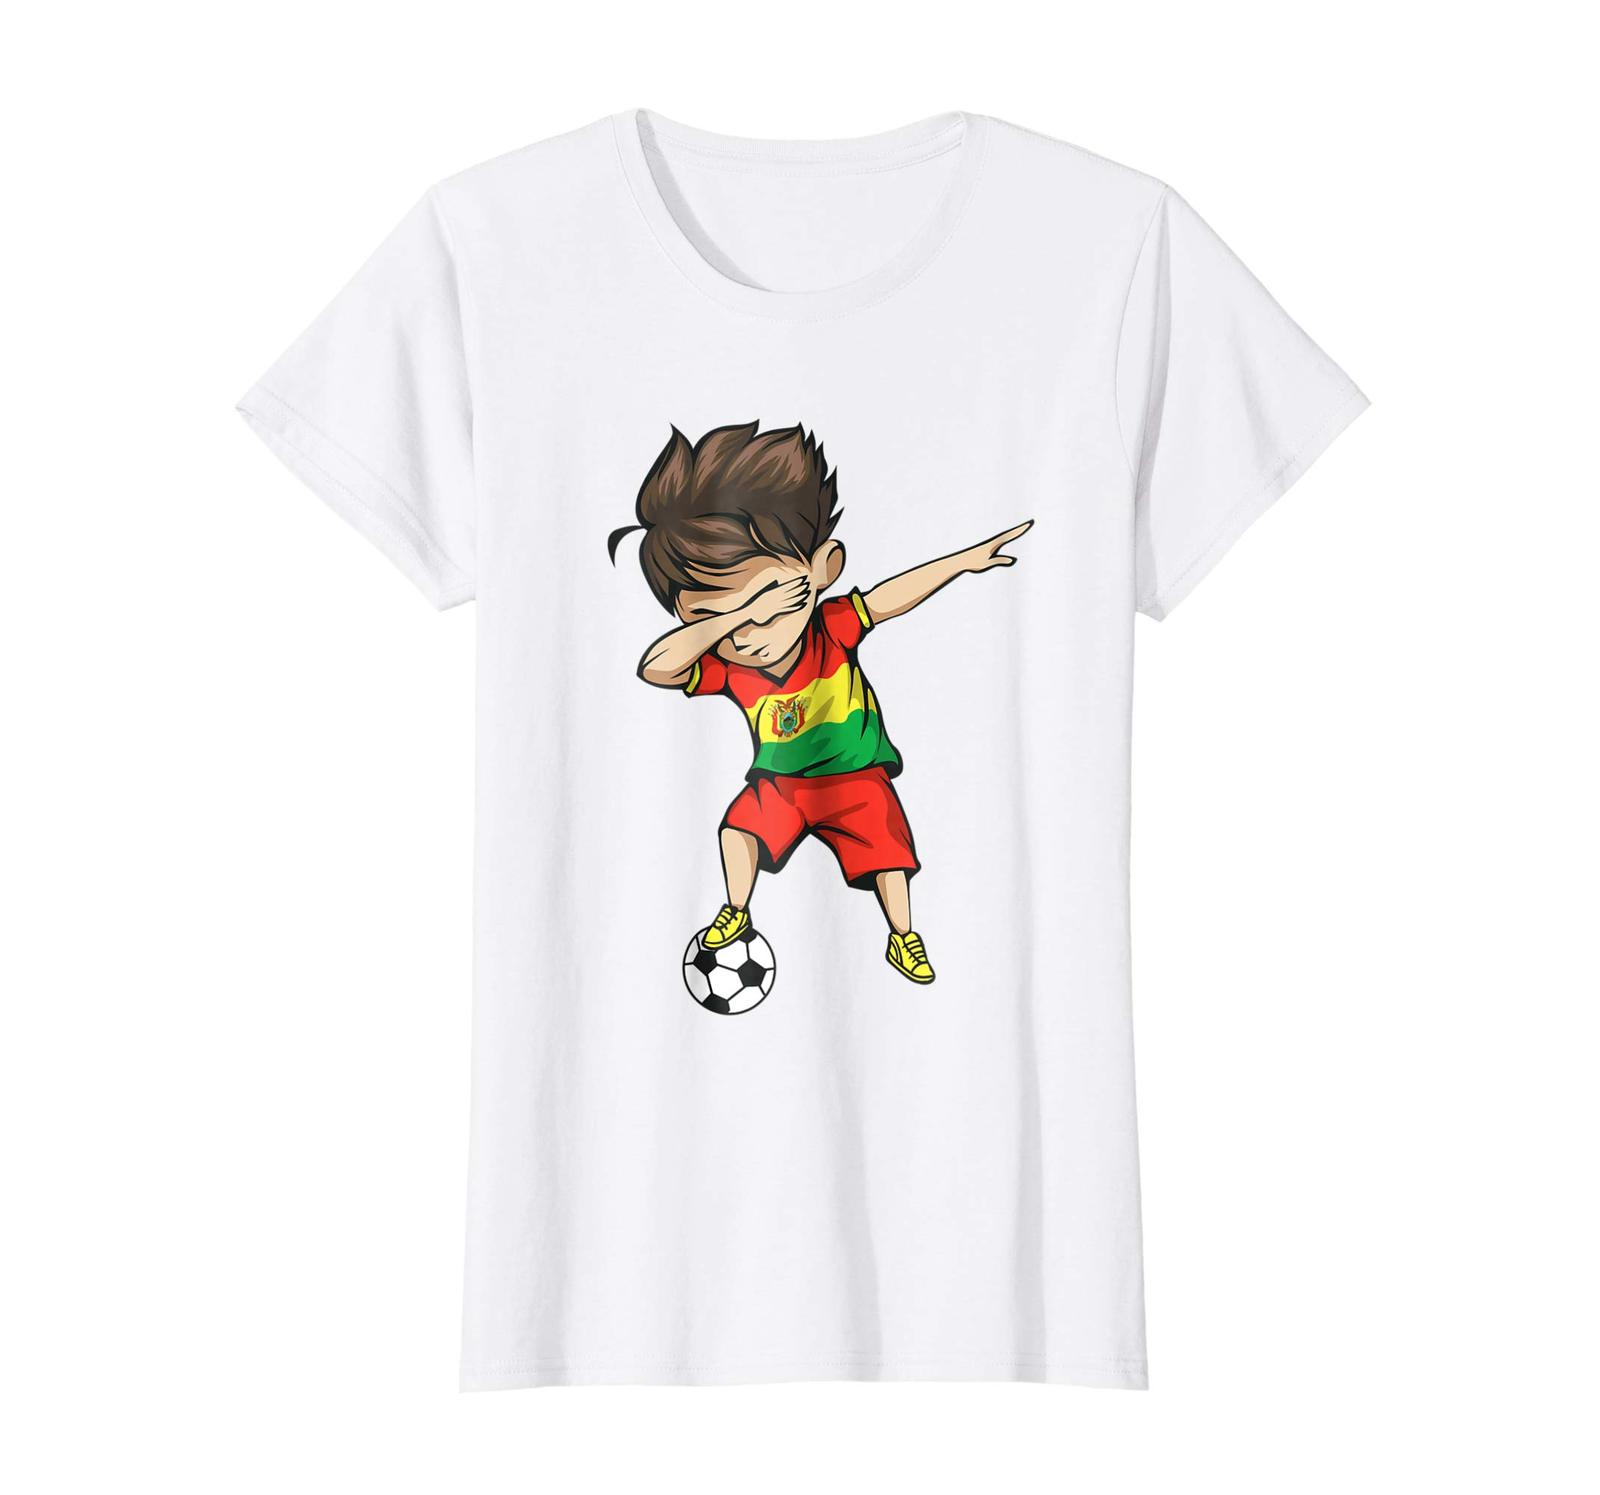 Sport Shirts - Dabbing Soccer Boy Bolivia Jersey Shirt - Bolivian Football Wowen - $19.95 - $23.95